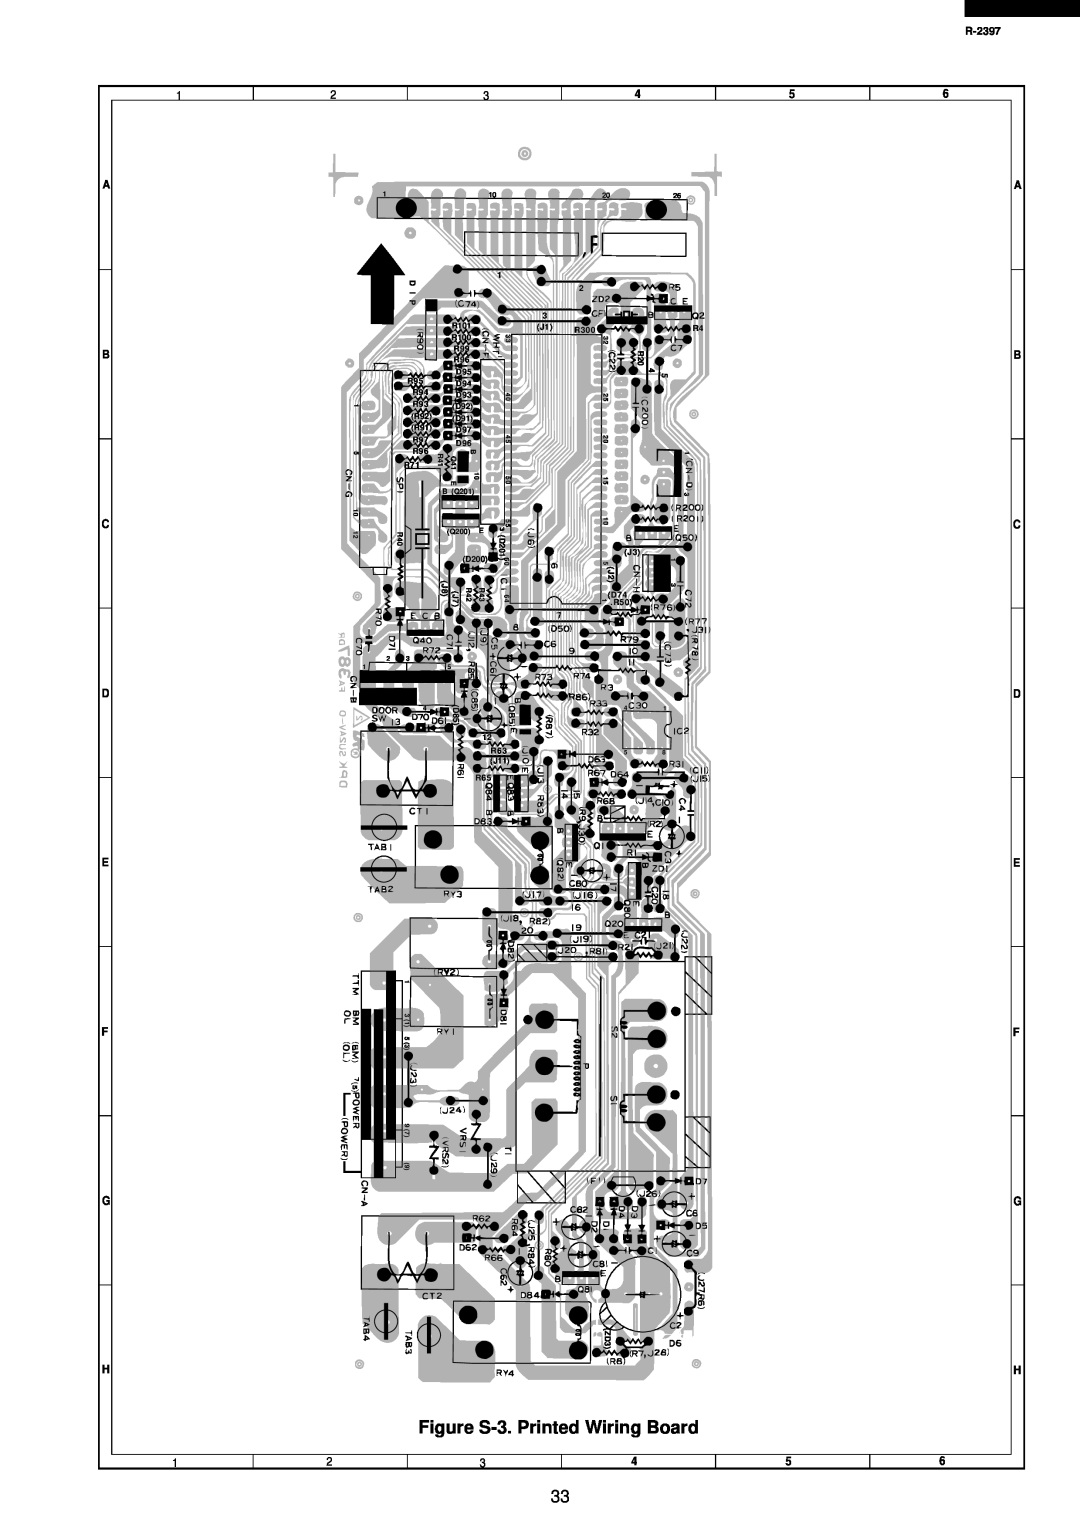 Sharp R-2397 service manual Figure S-3.Printed Wiring Board 